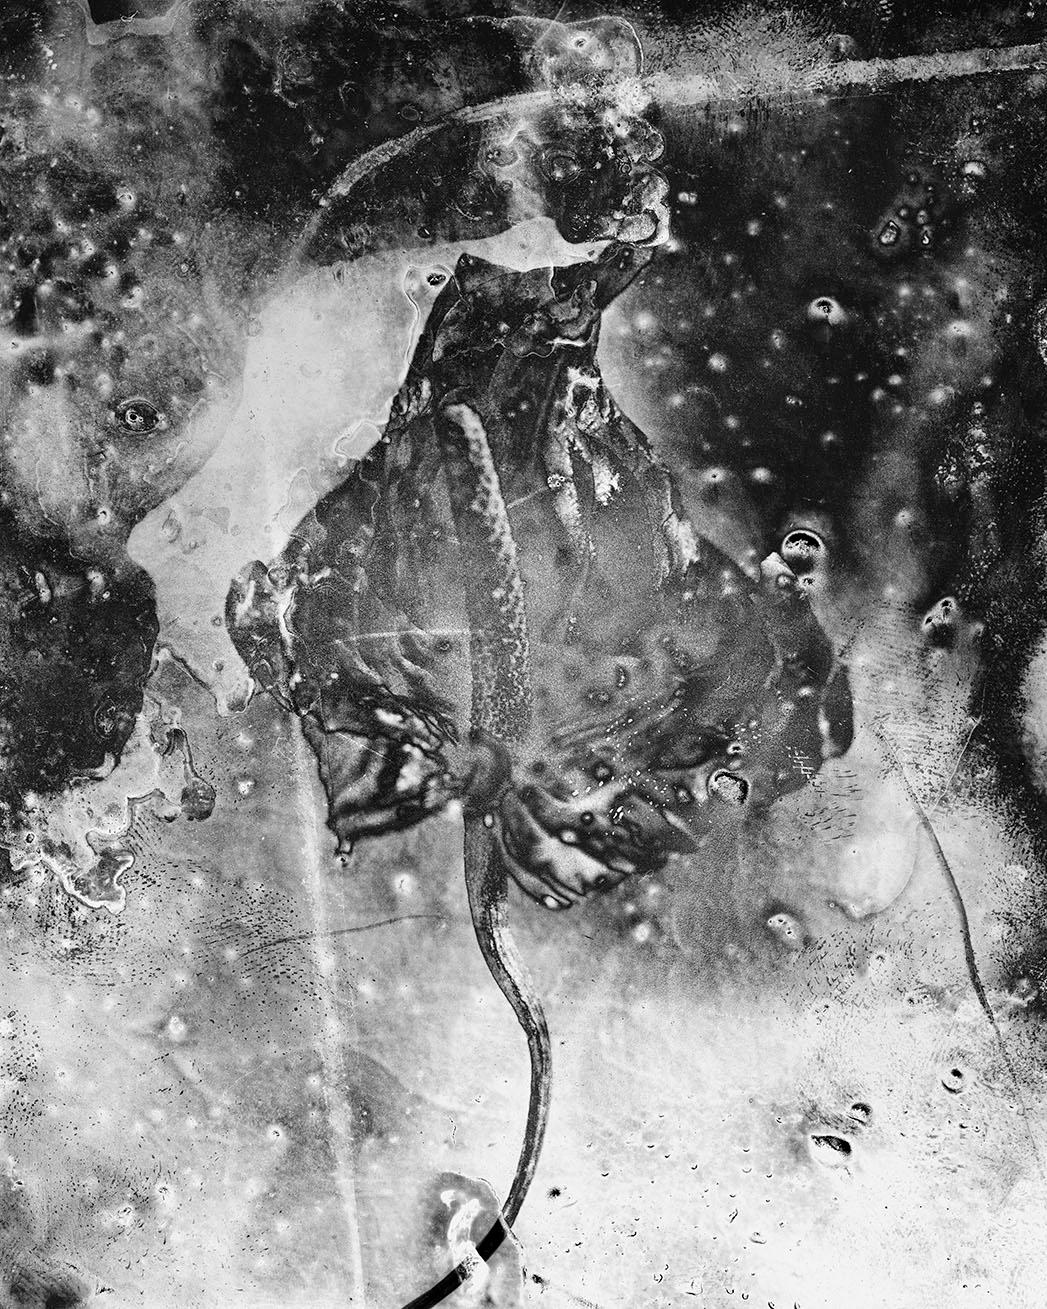 Anthurium - Contemporary still life photo, memento mori, nature morte, abstract